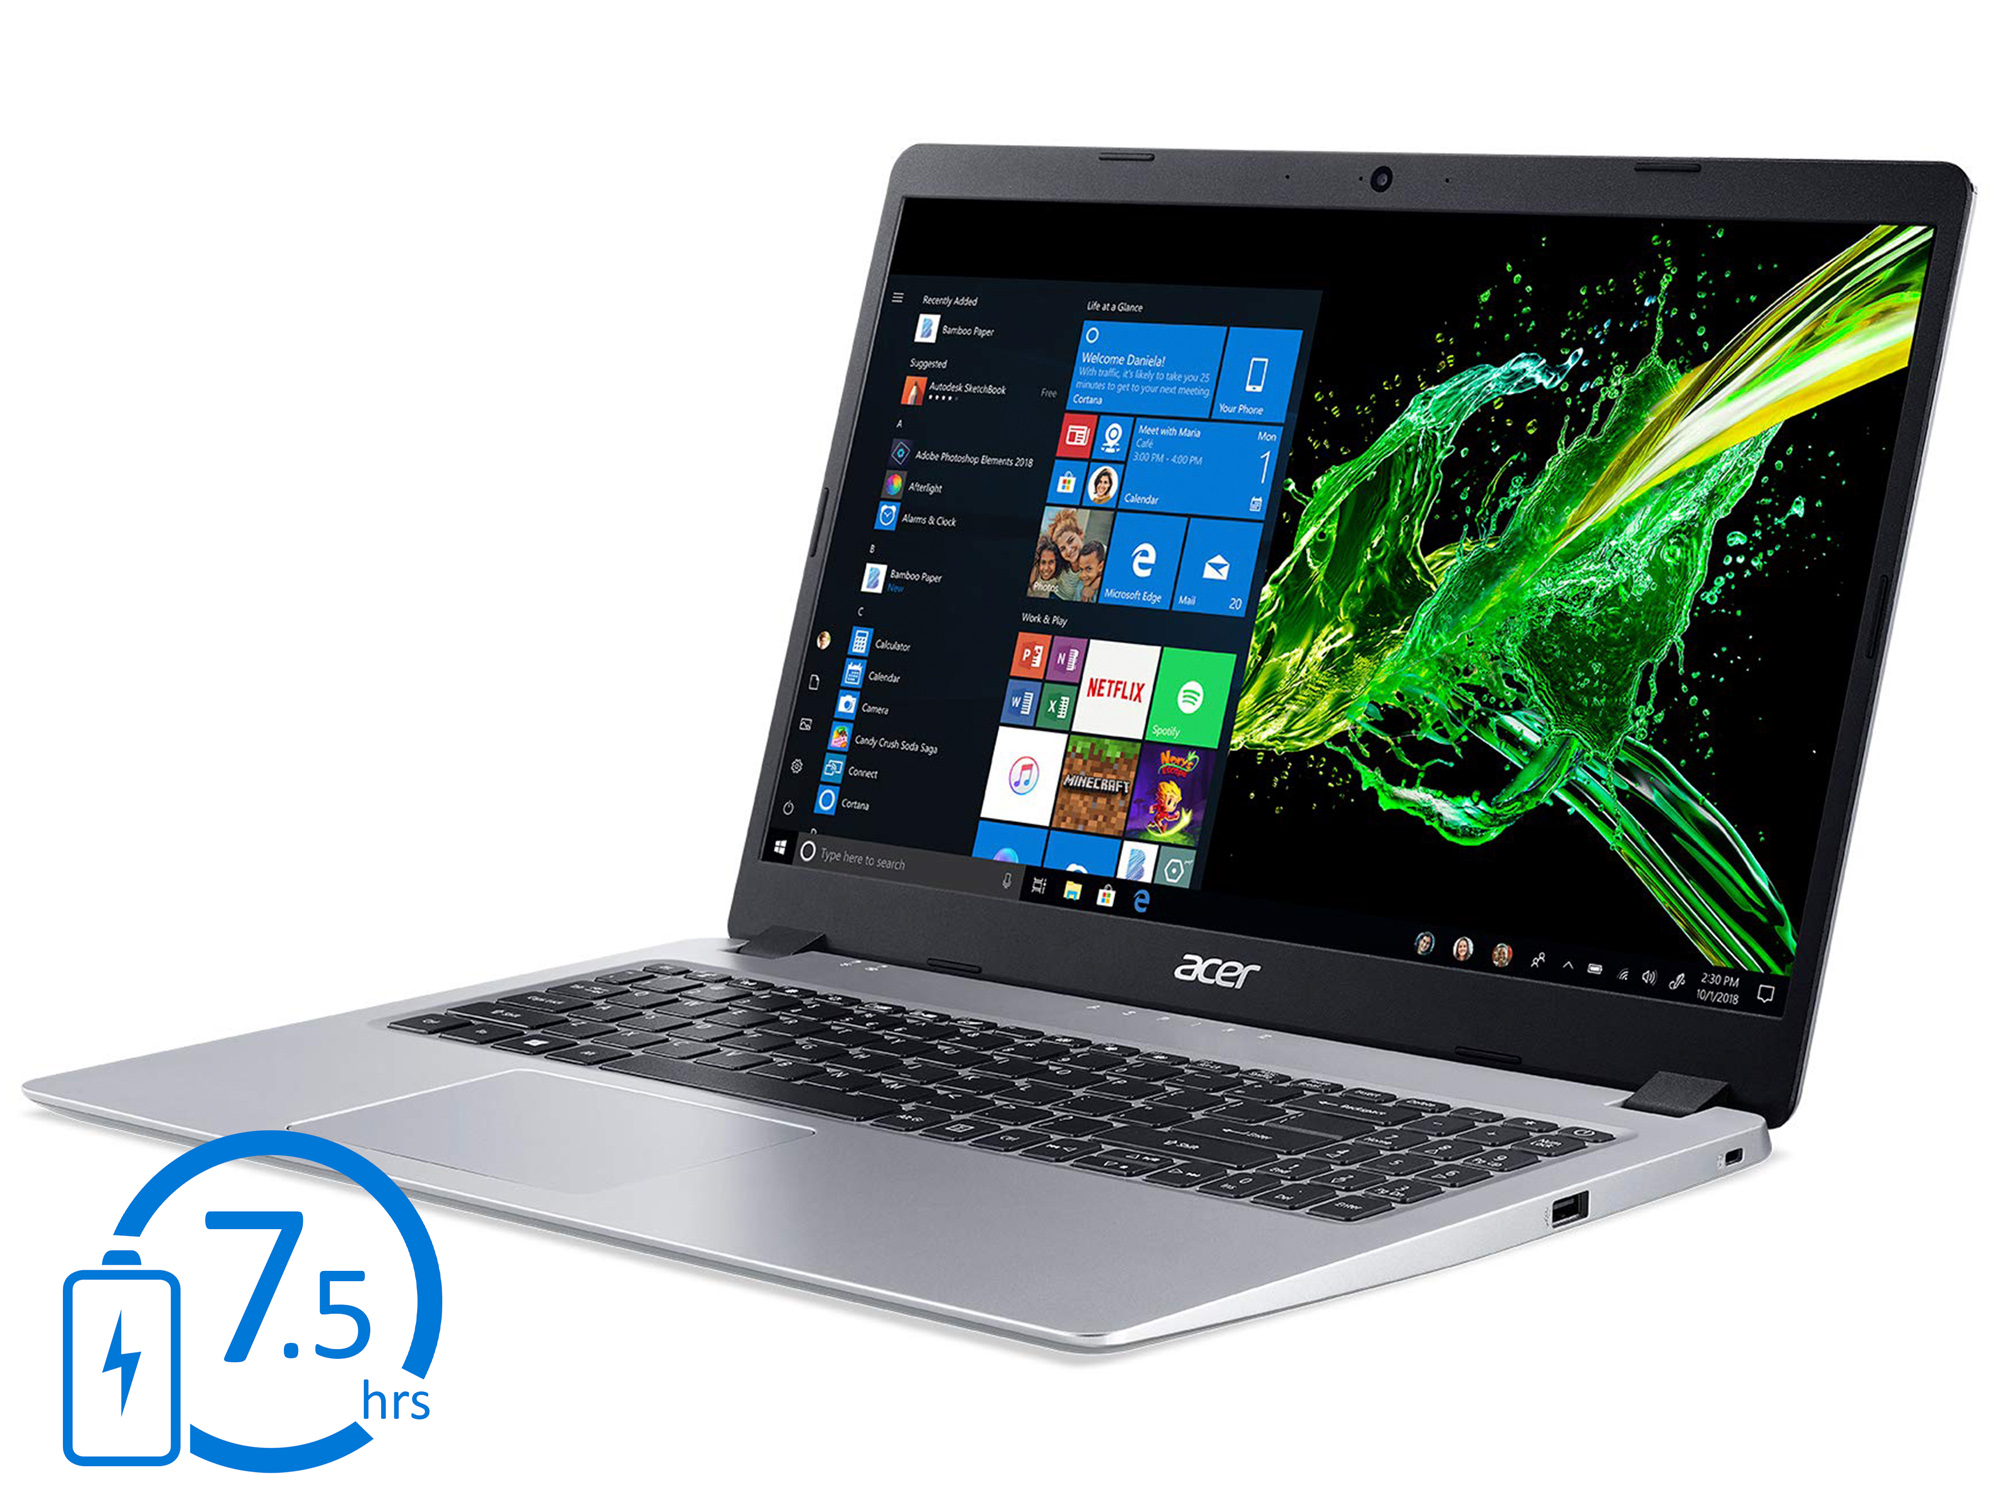 Acer Aspire 5 Slim Laptop, 15.6" Full HD IPS Display, AMD Ryzen 3 3200U, Vega 3 Graphics, 4GB DDR4, 128GB SSD, Backlit Keyboard, Windows 10 in S Mode, A515-43-R19L - image 4 of 7